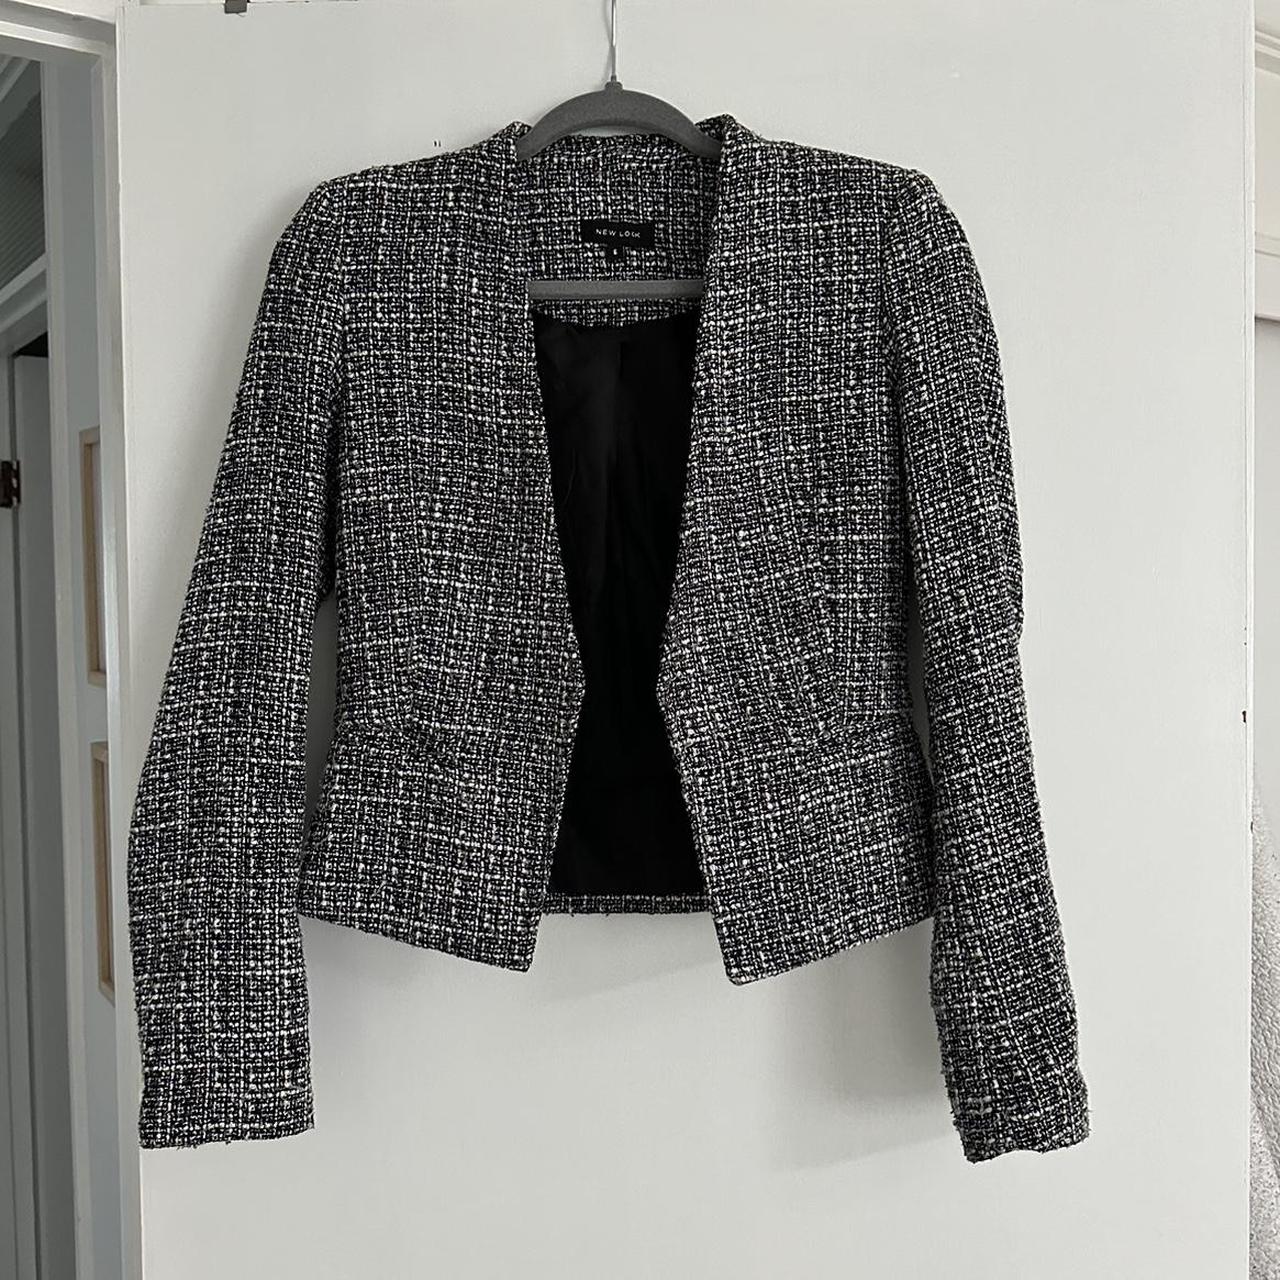 New Look smart fitted blazer / jacket in black /... - Depop